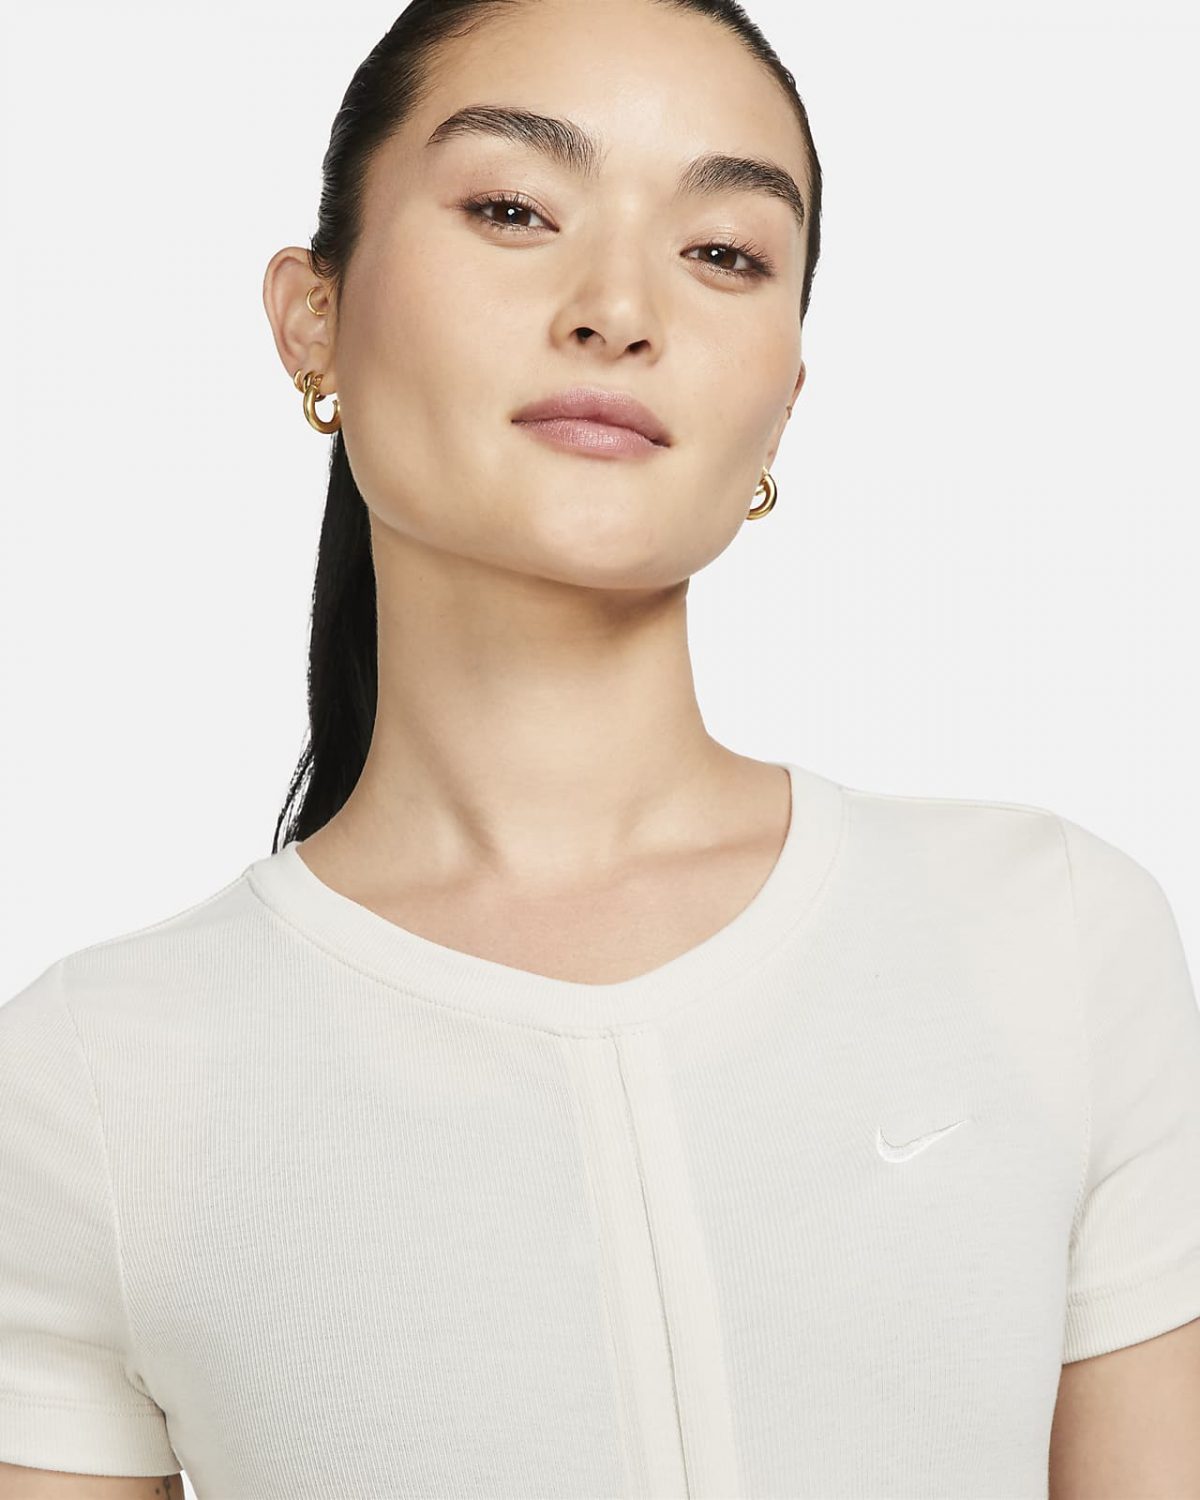 Женская рубашка Nike Sportswear Essentials